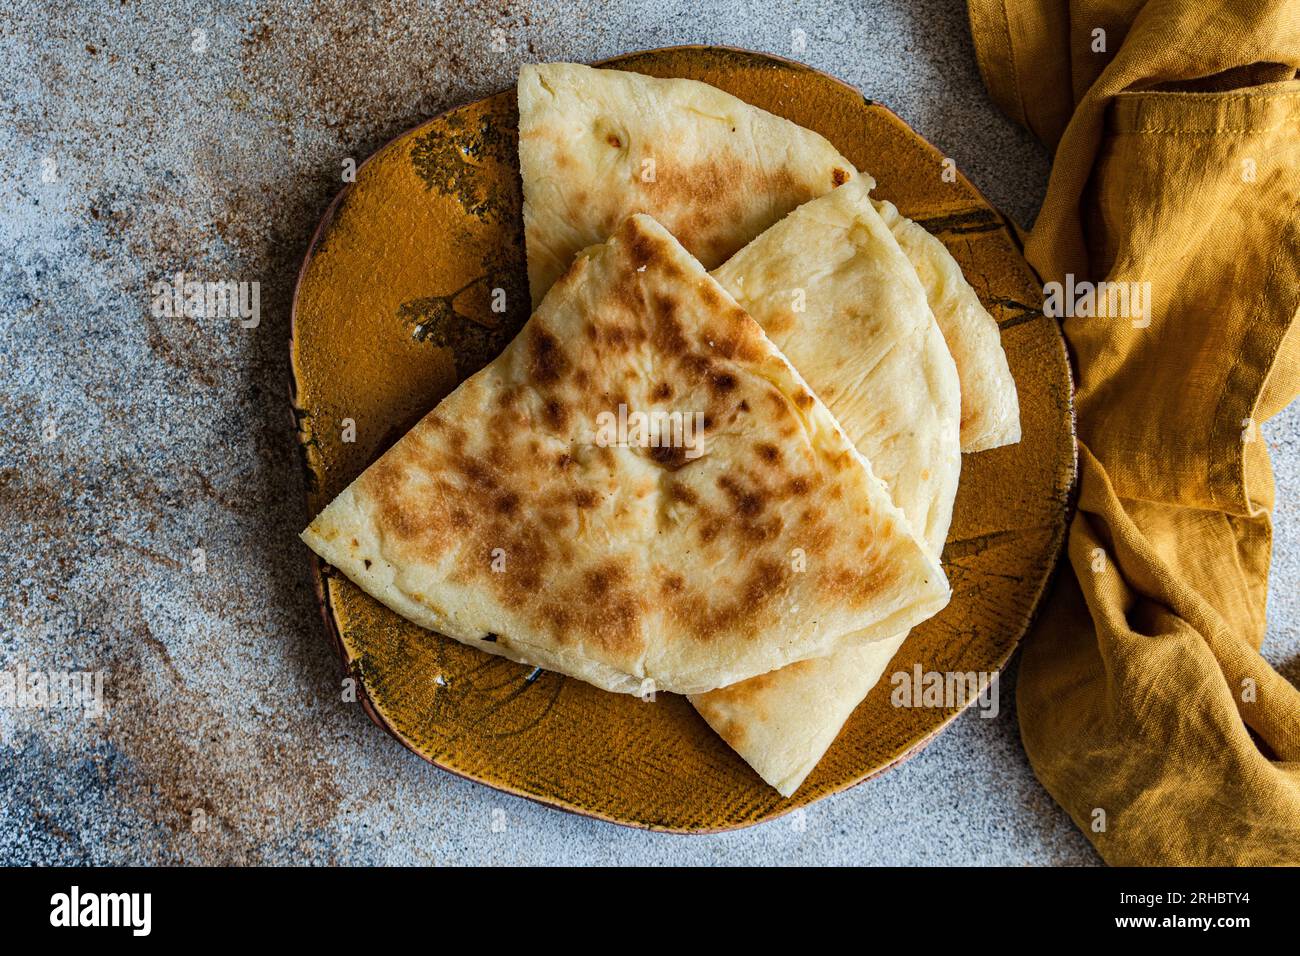 Overhead view of Georgian cheese bread slices (Imeruli khachapuri) on a plate Stock Photo